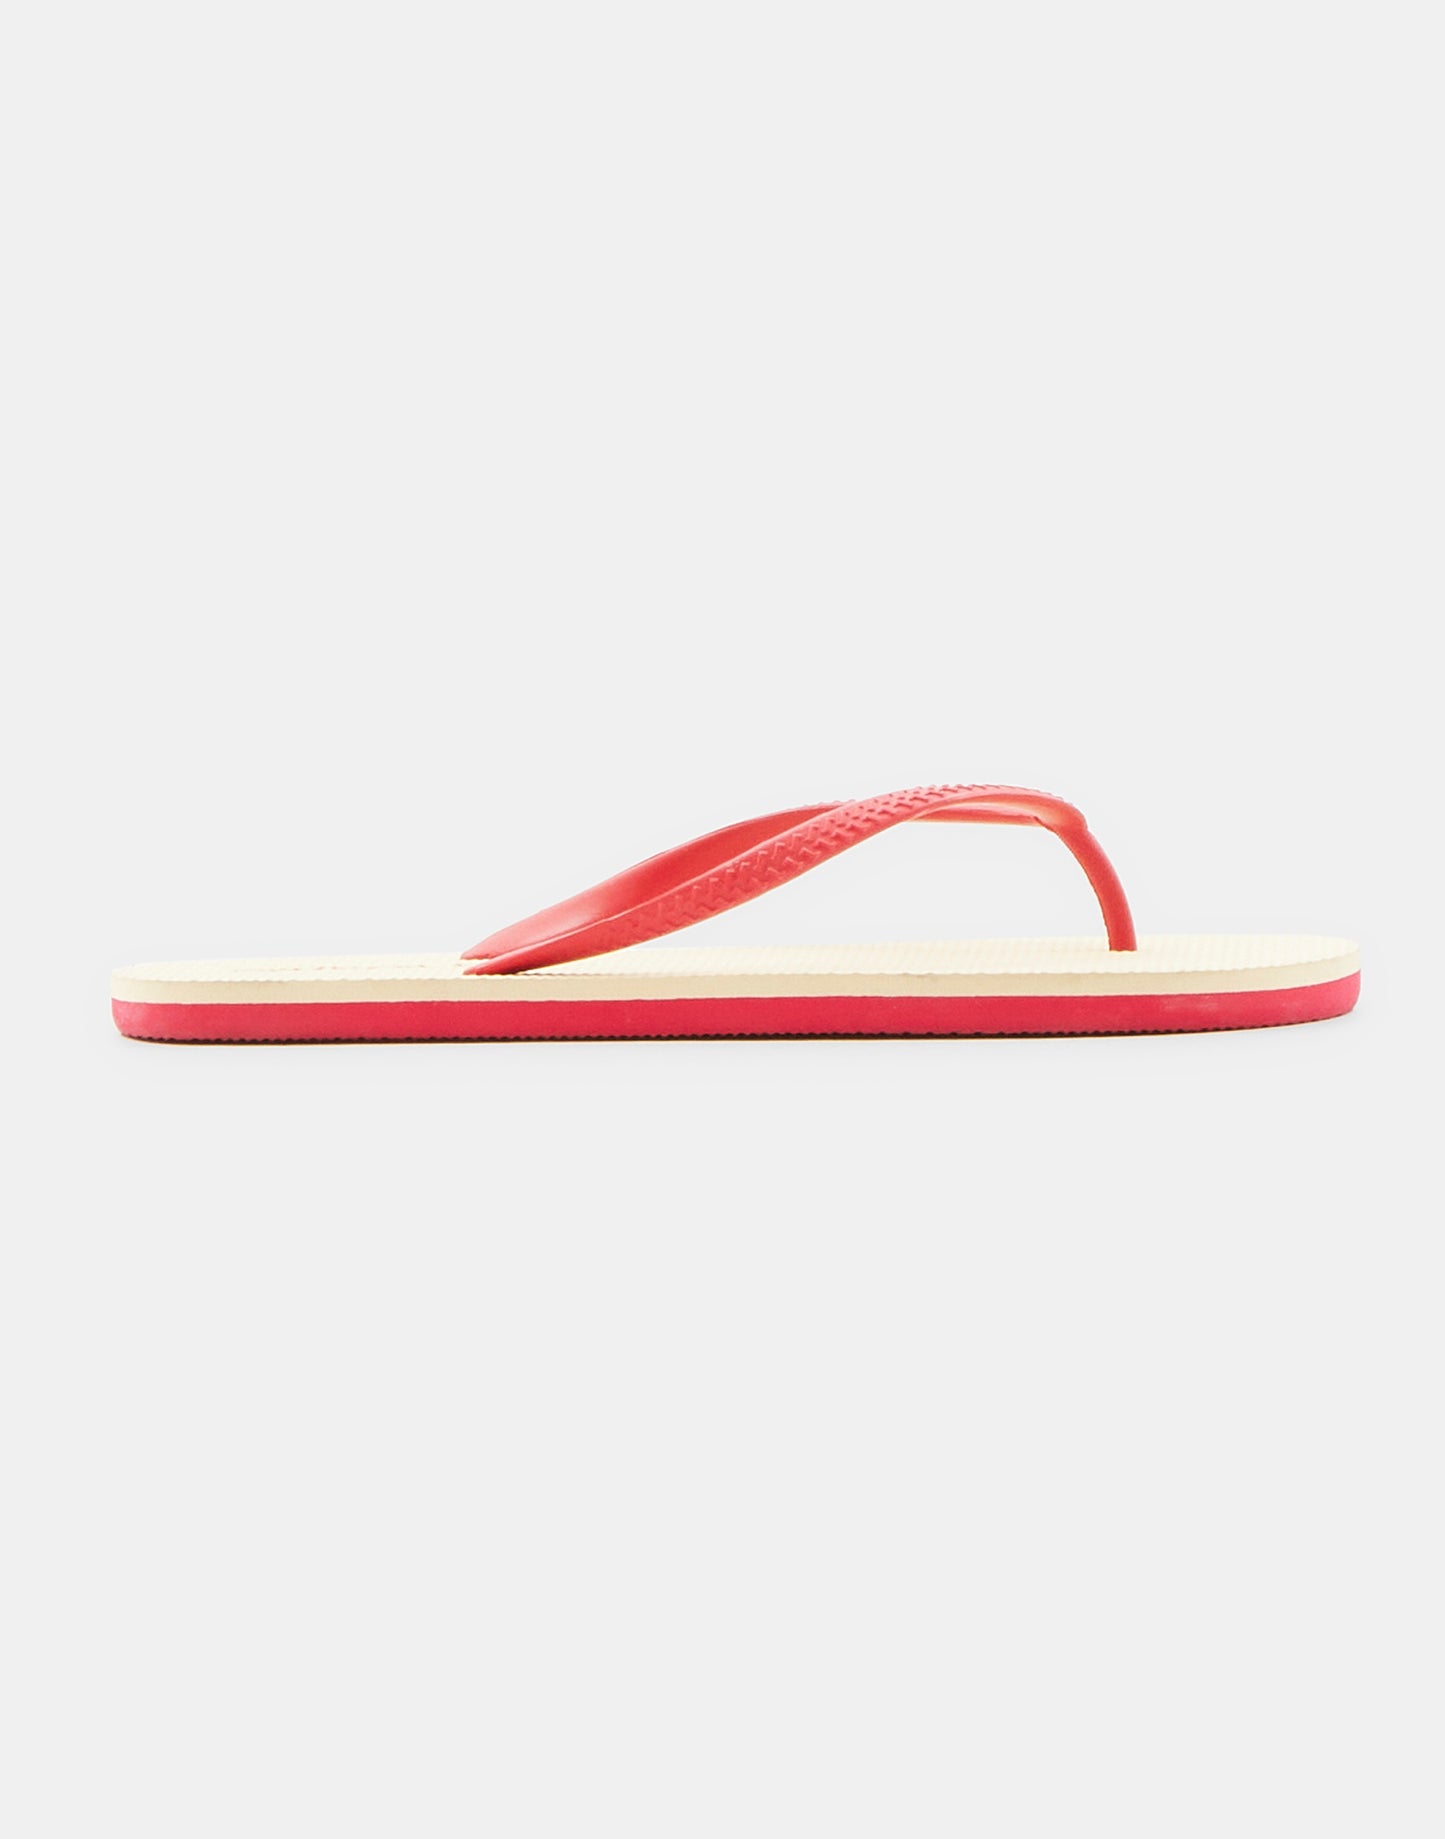 Flip-Flop sandal